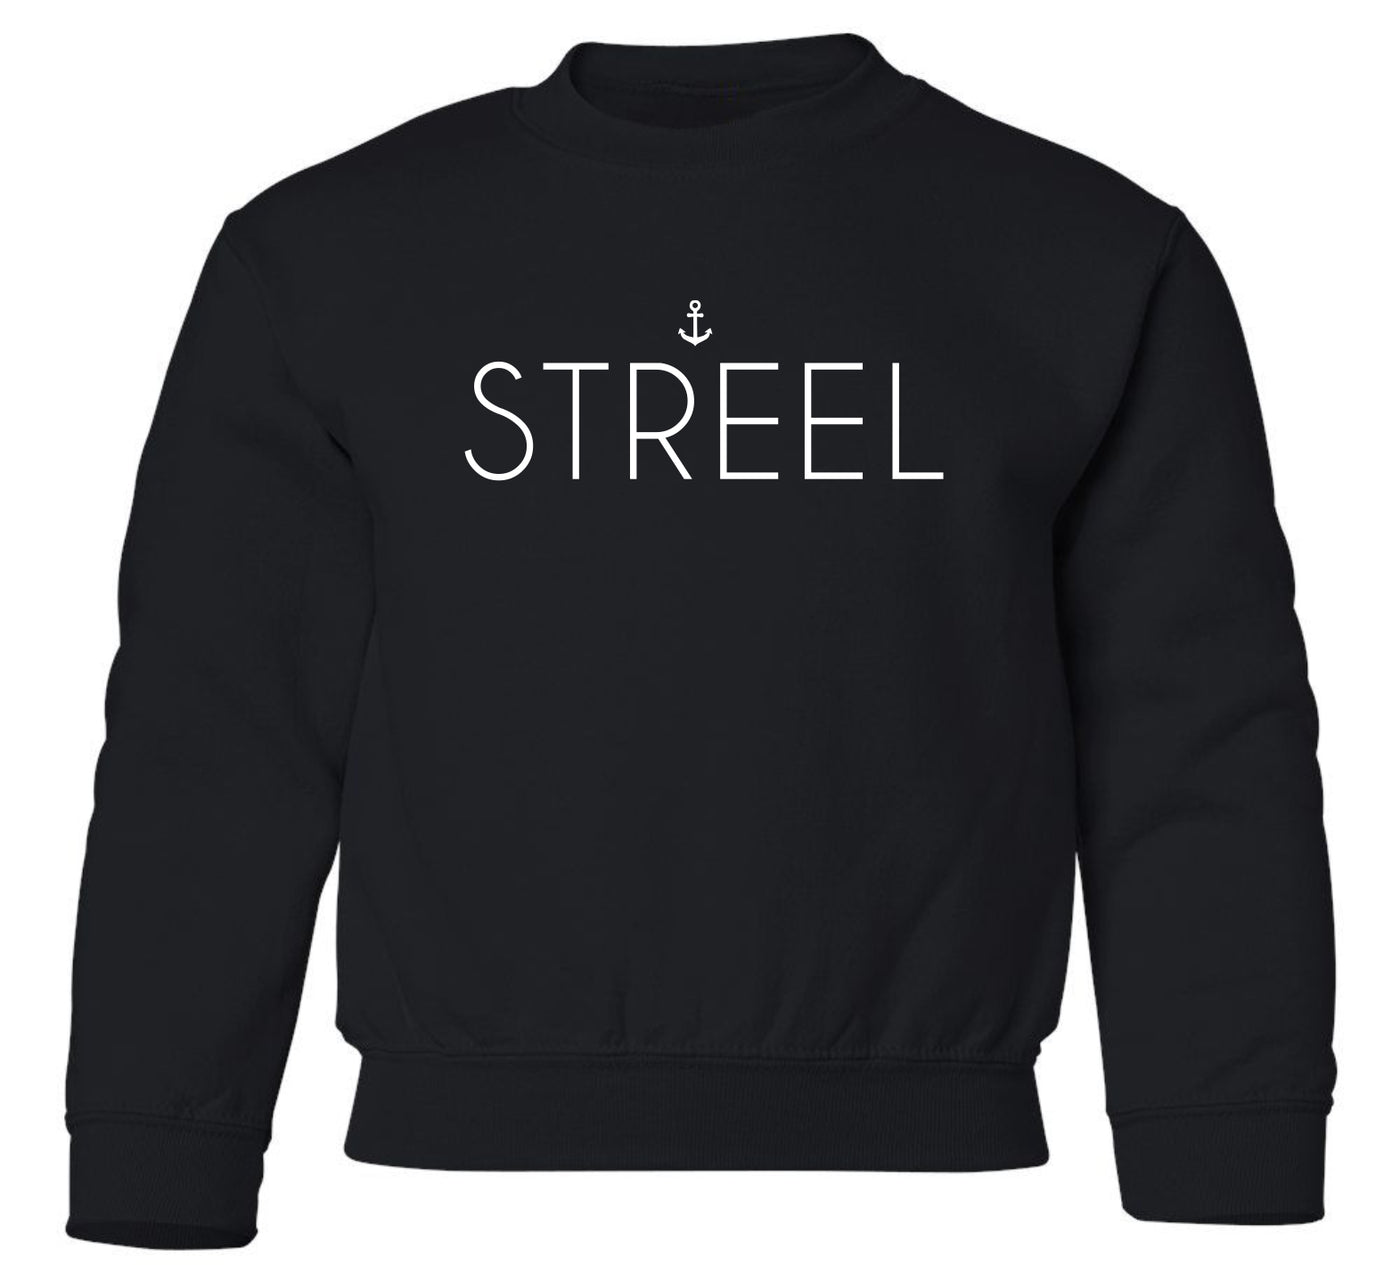 "Streel" Toddler/Youth Crewneck Sweatshirt